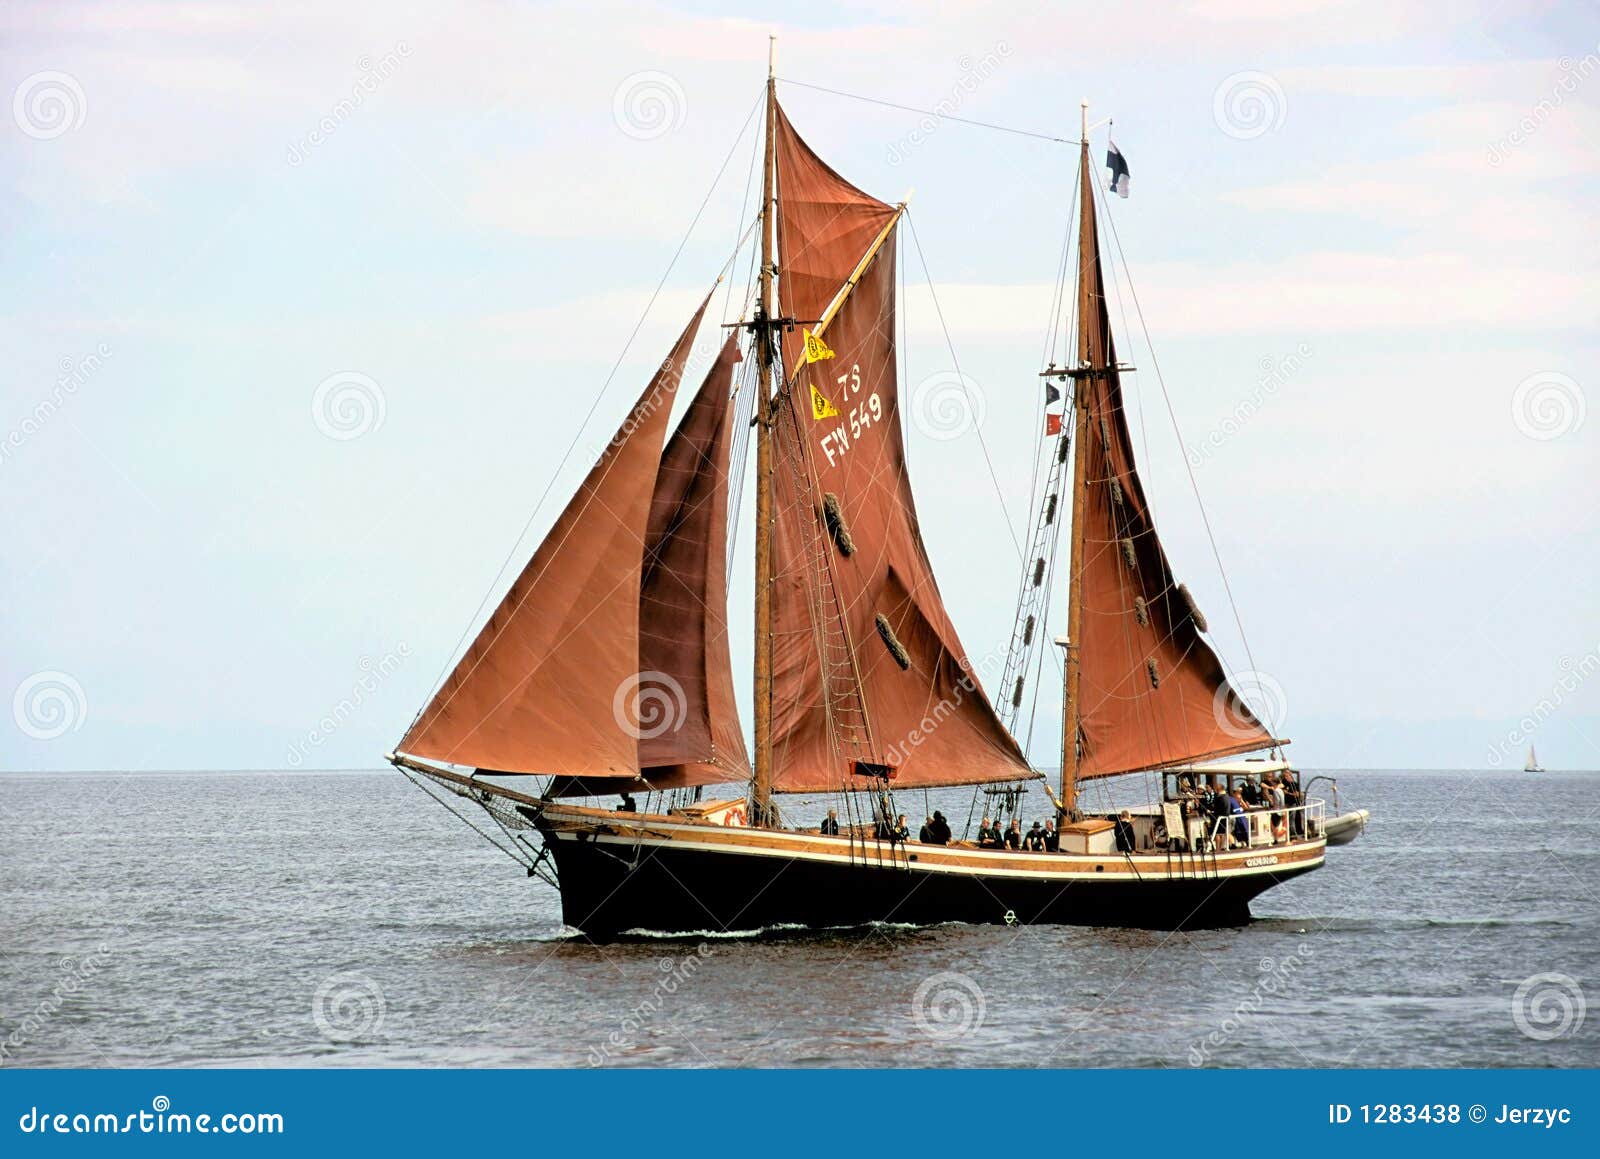 Sailing-ship-6 stock photo. Image of cruise, wind, sails 